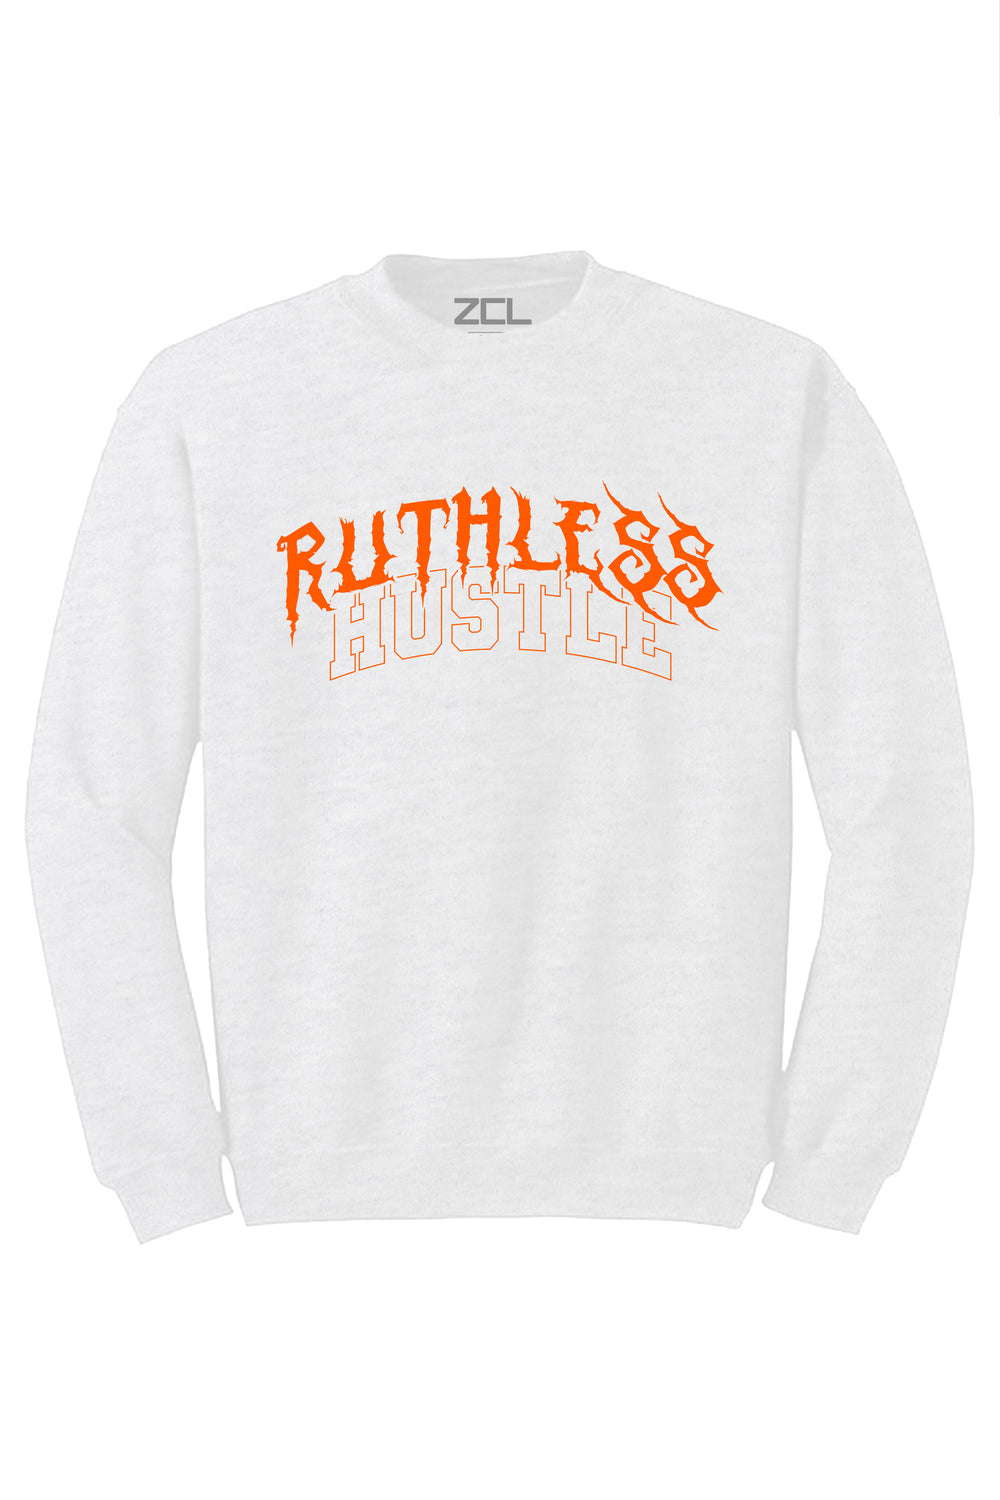 Ruthless Hustle Crewneck Sweatshirt (Orange Logo)